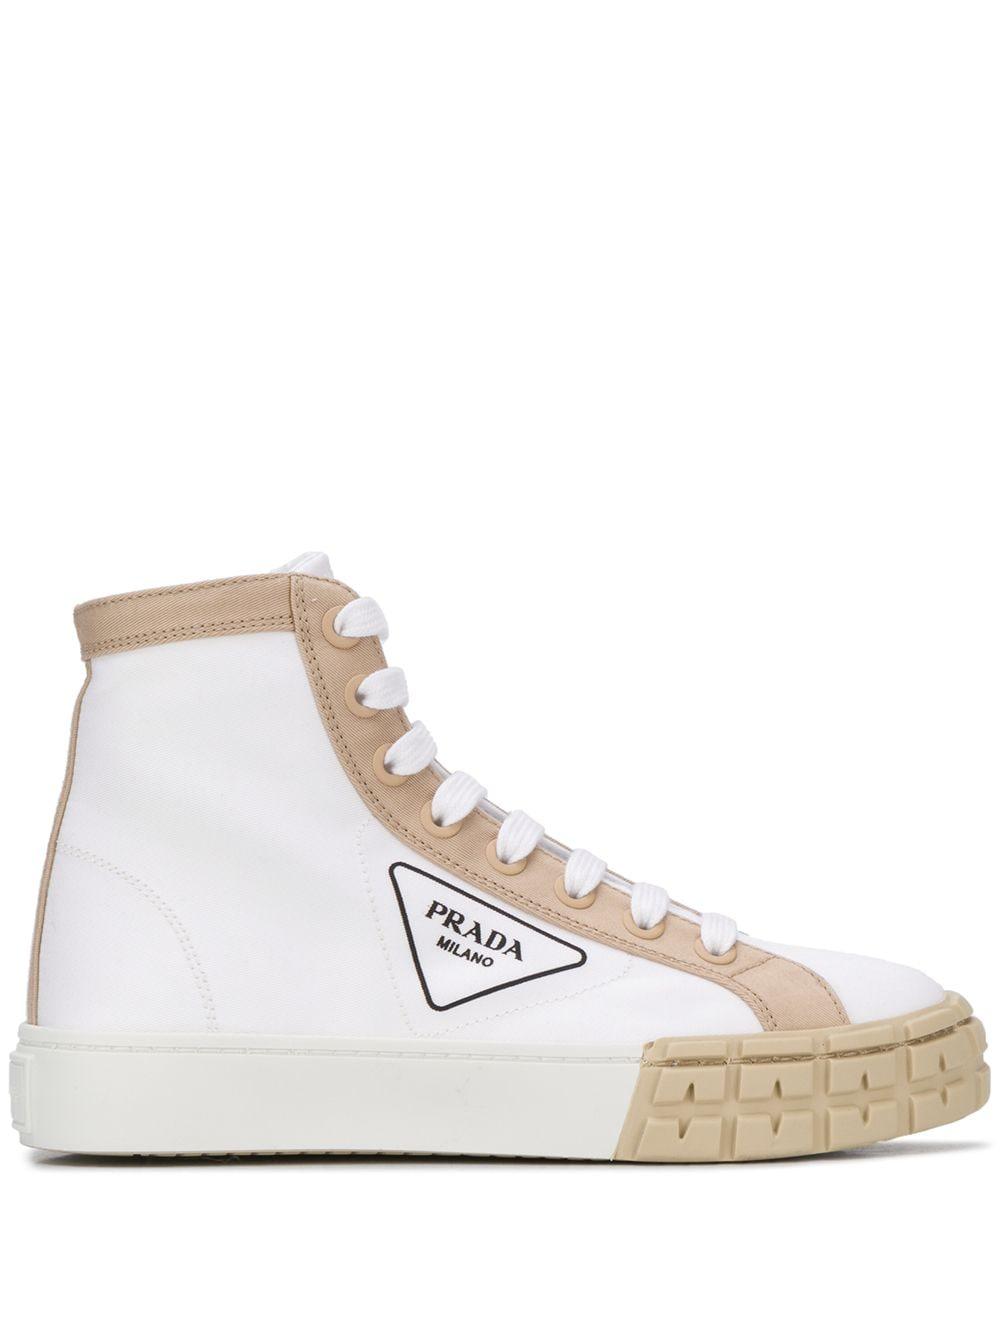 Prada Gabardine Hi-top Sneakers in White | Lyst